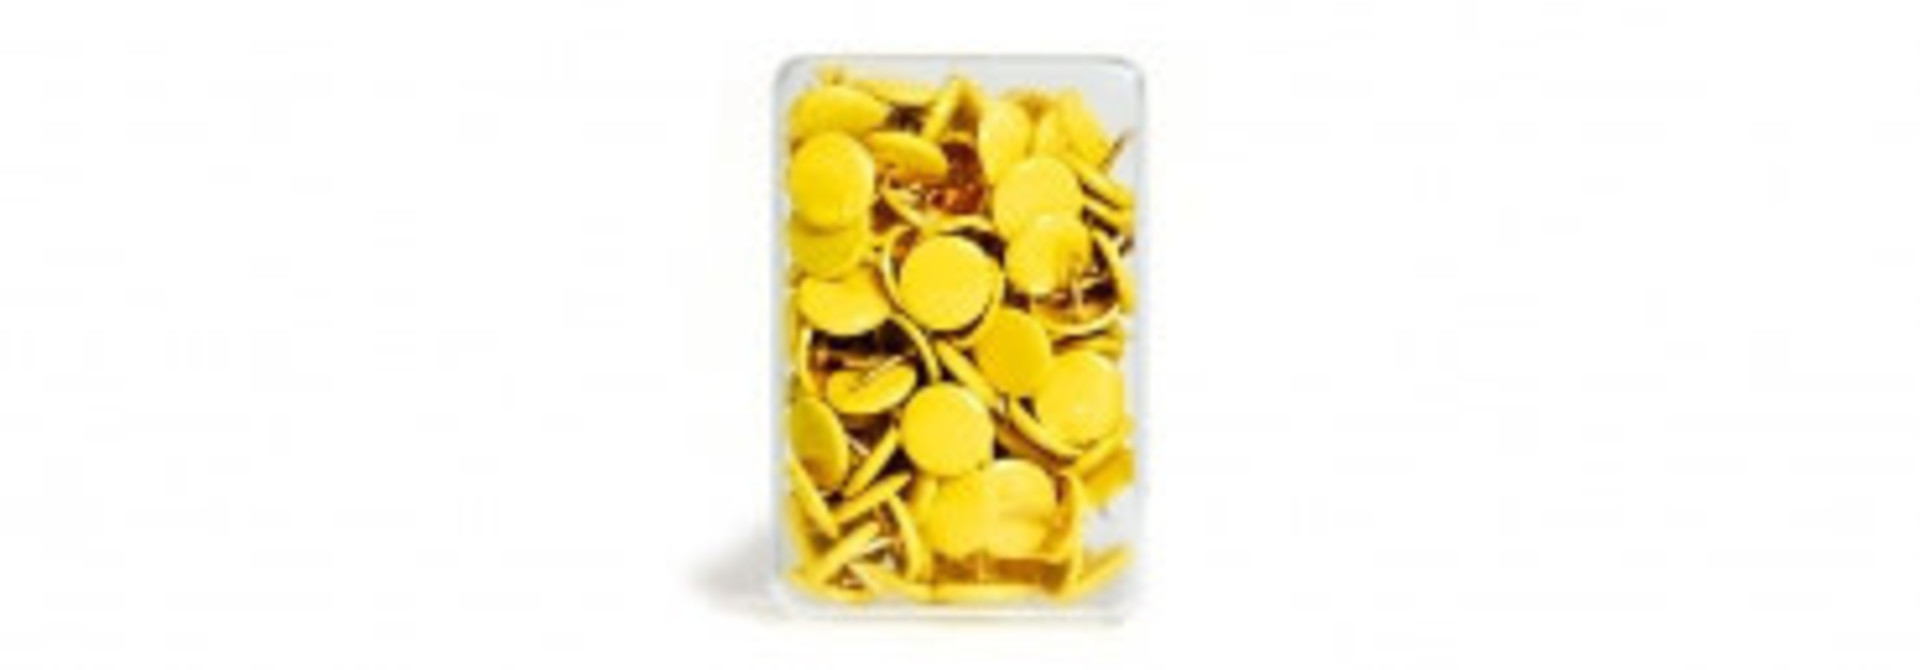 Thumbtacks yellow - 100 pieces